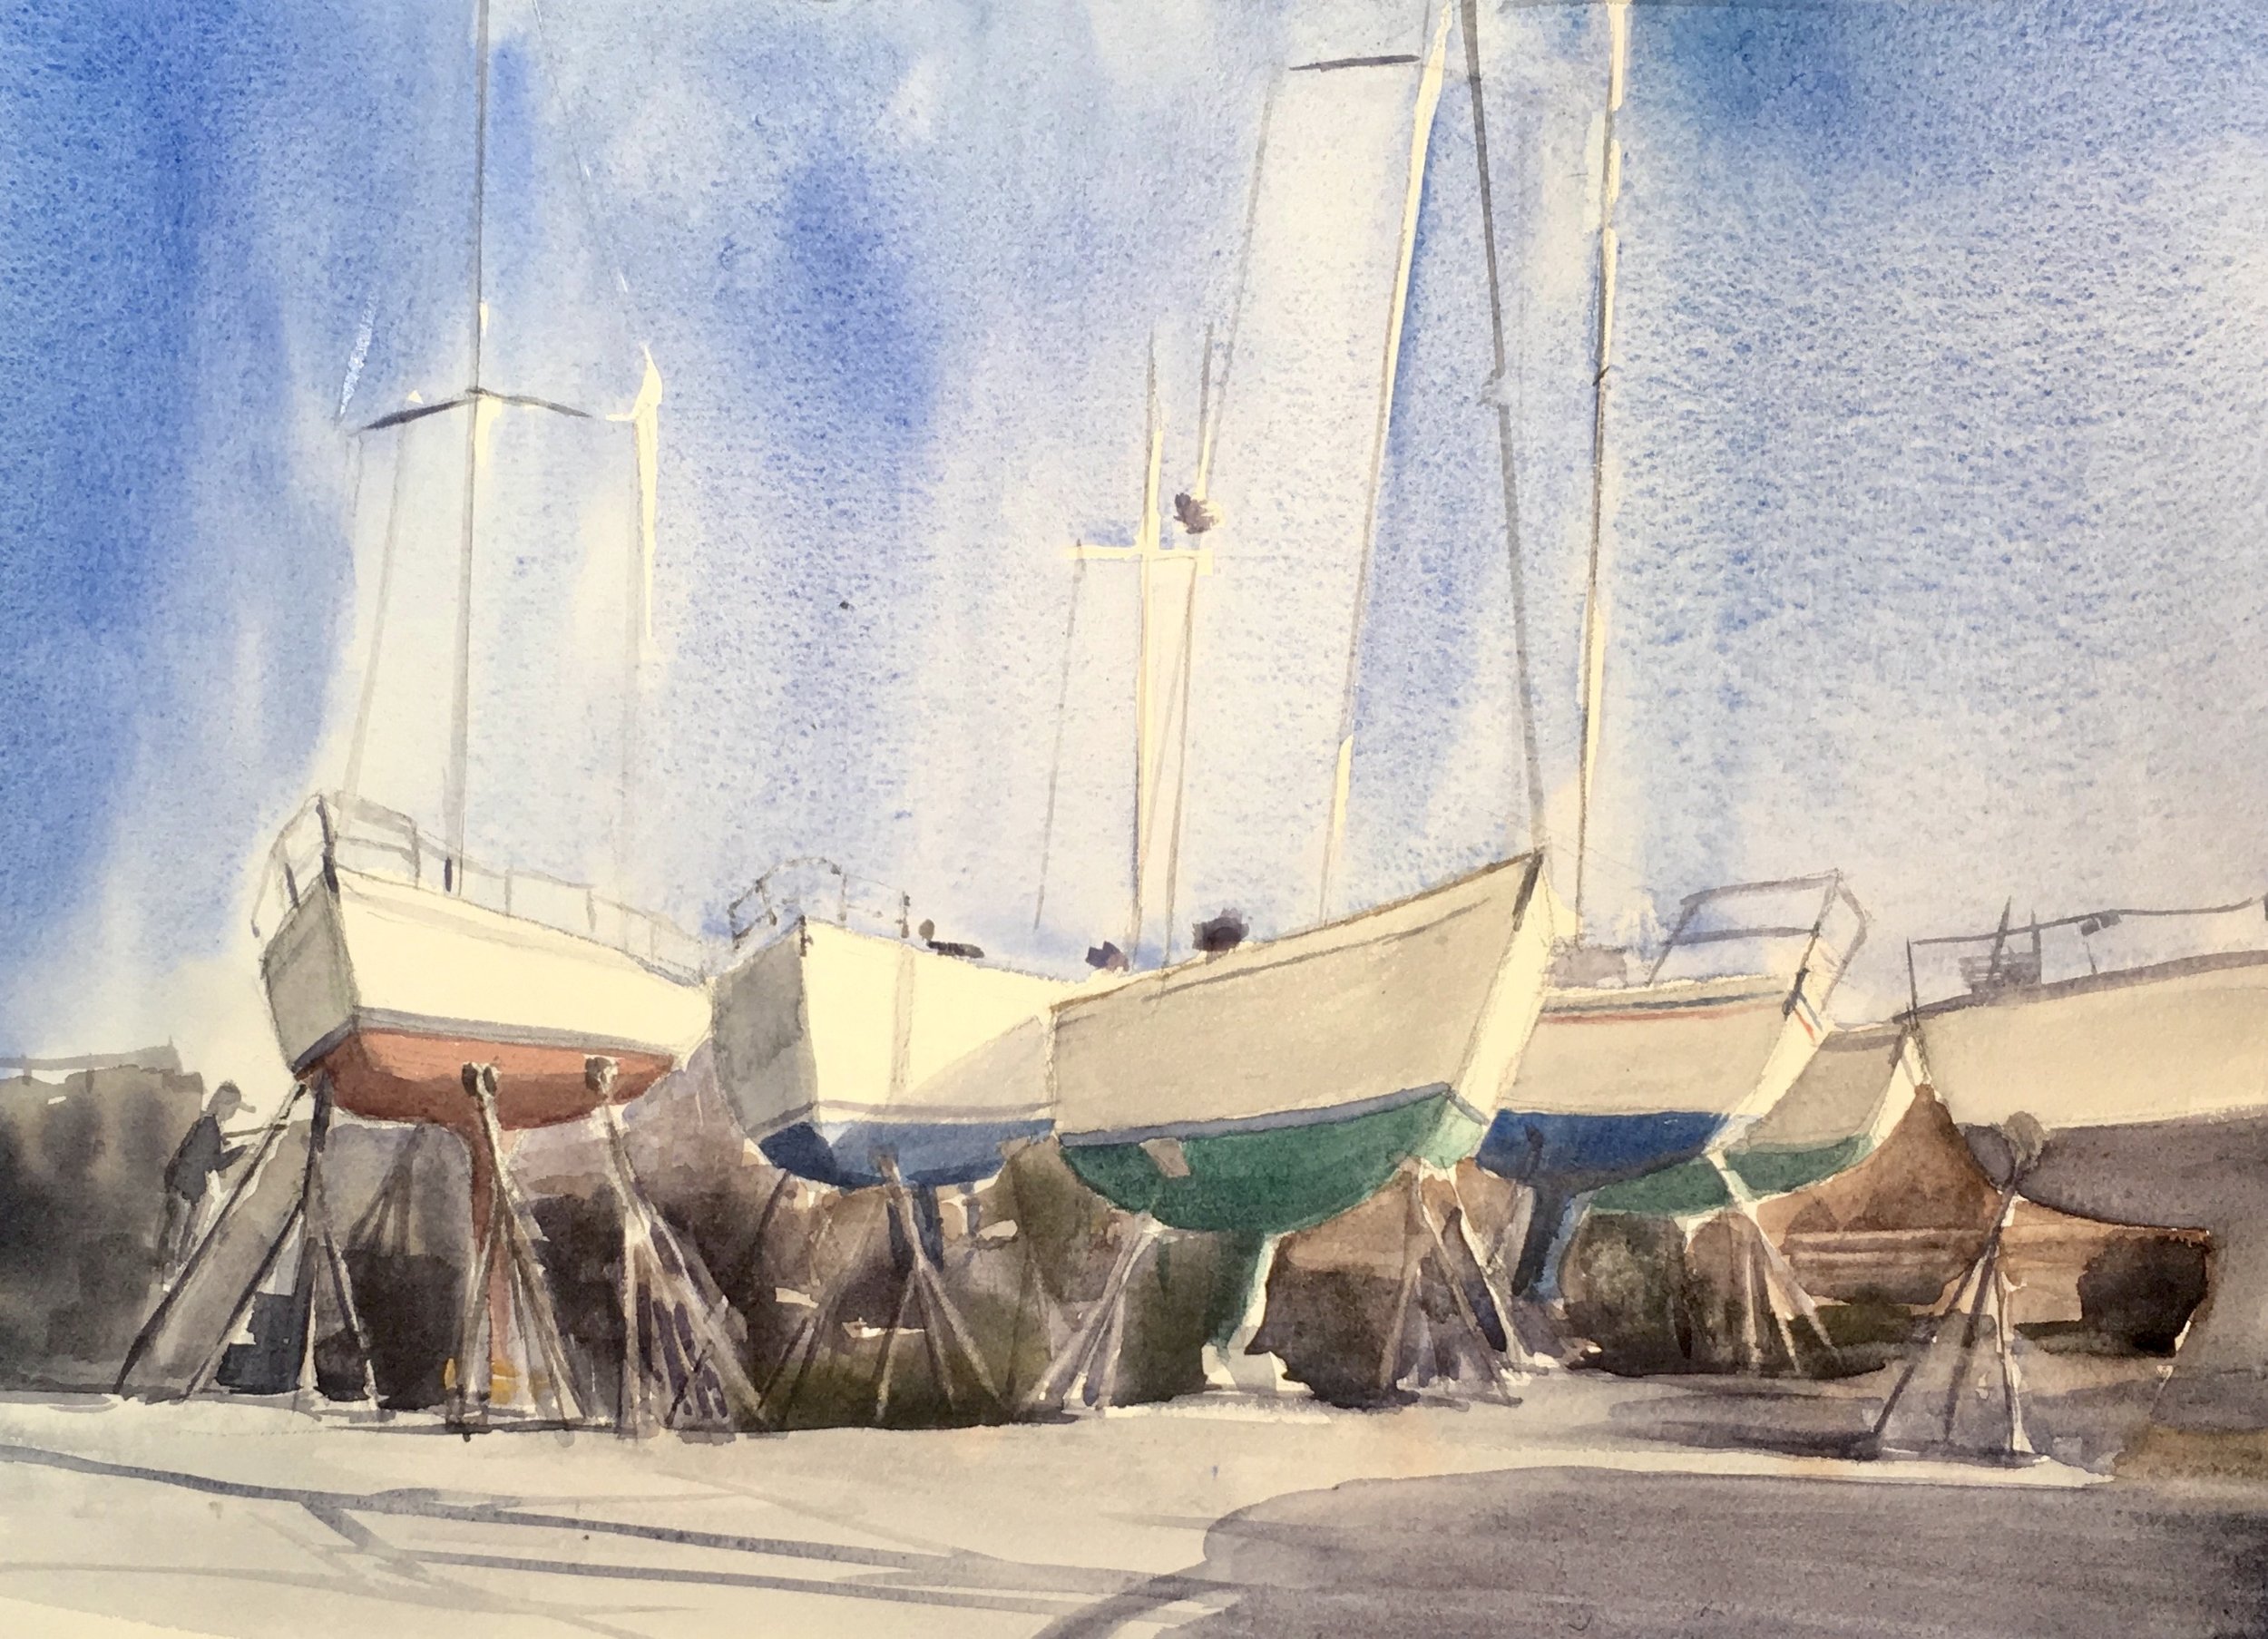 Boatyard Line-up, watercolor, 11 x14, sold